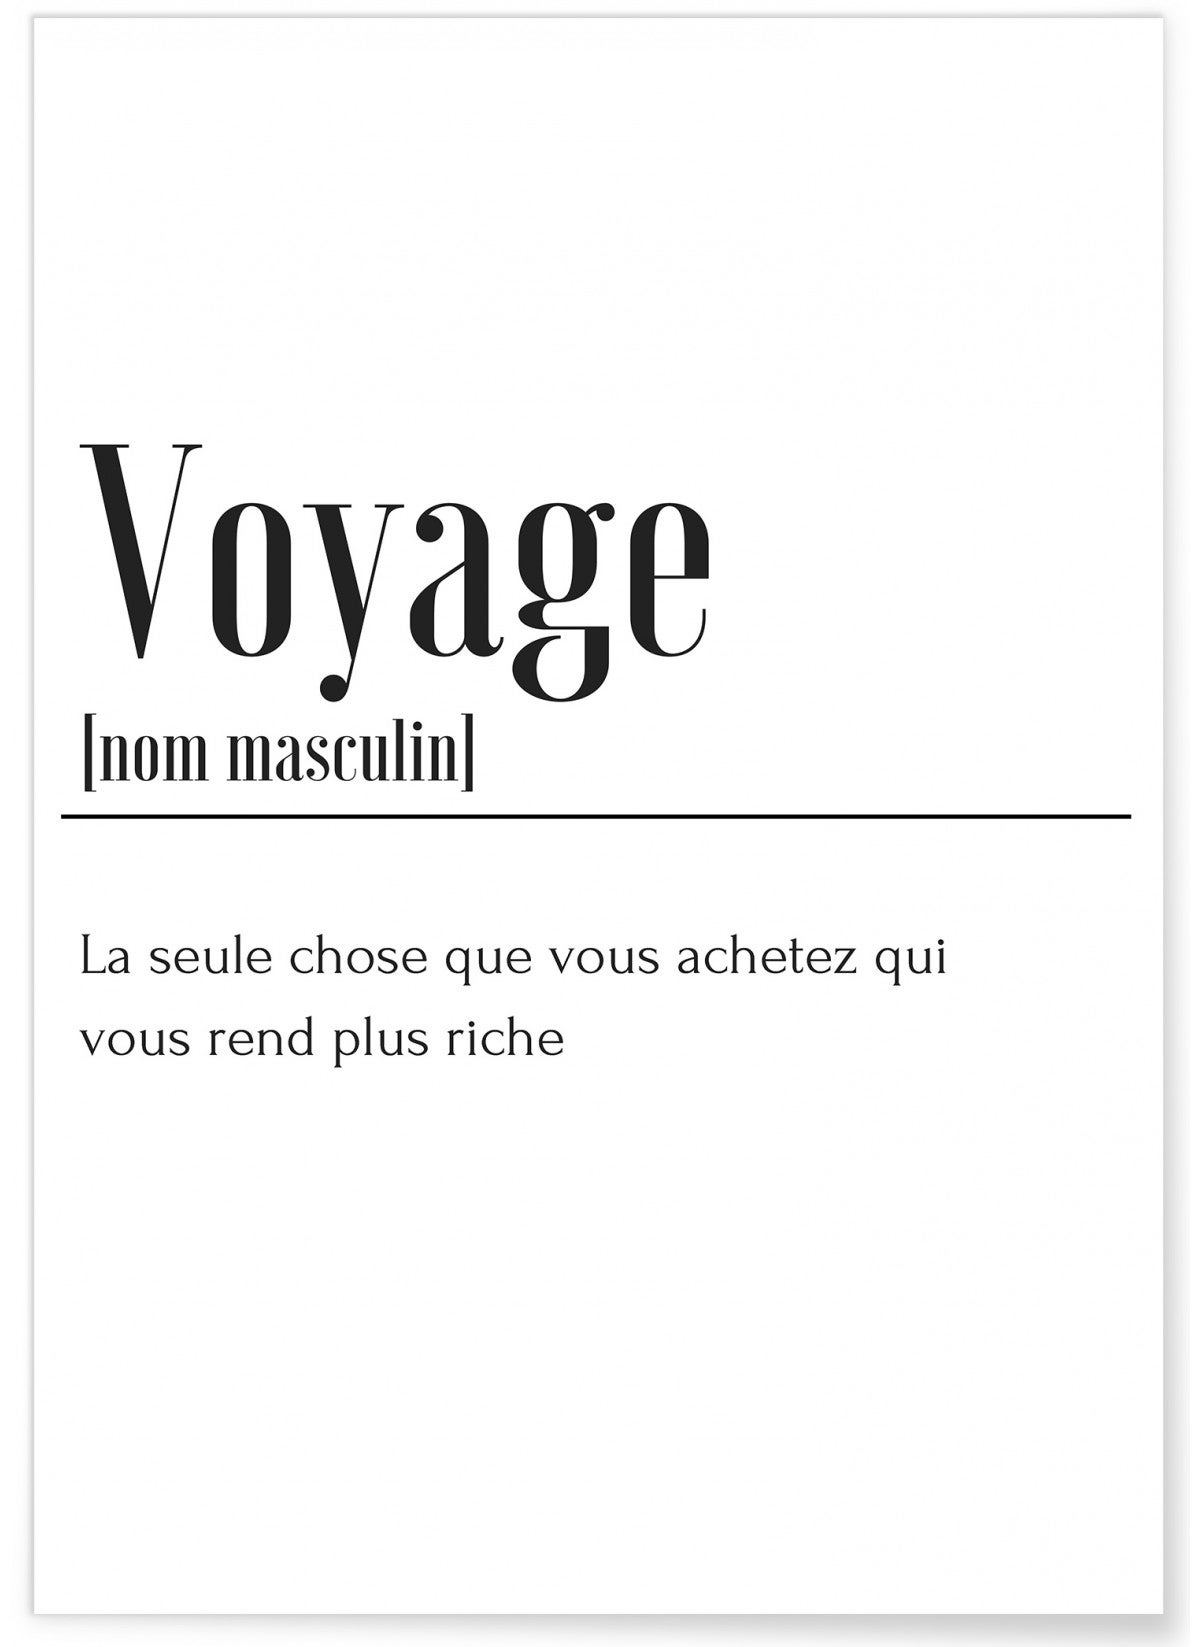 voyage definition